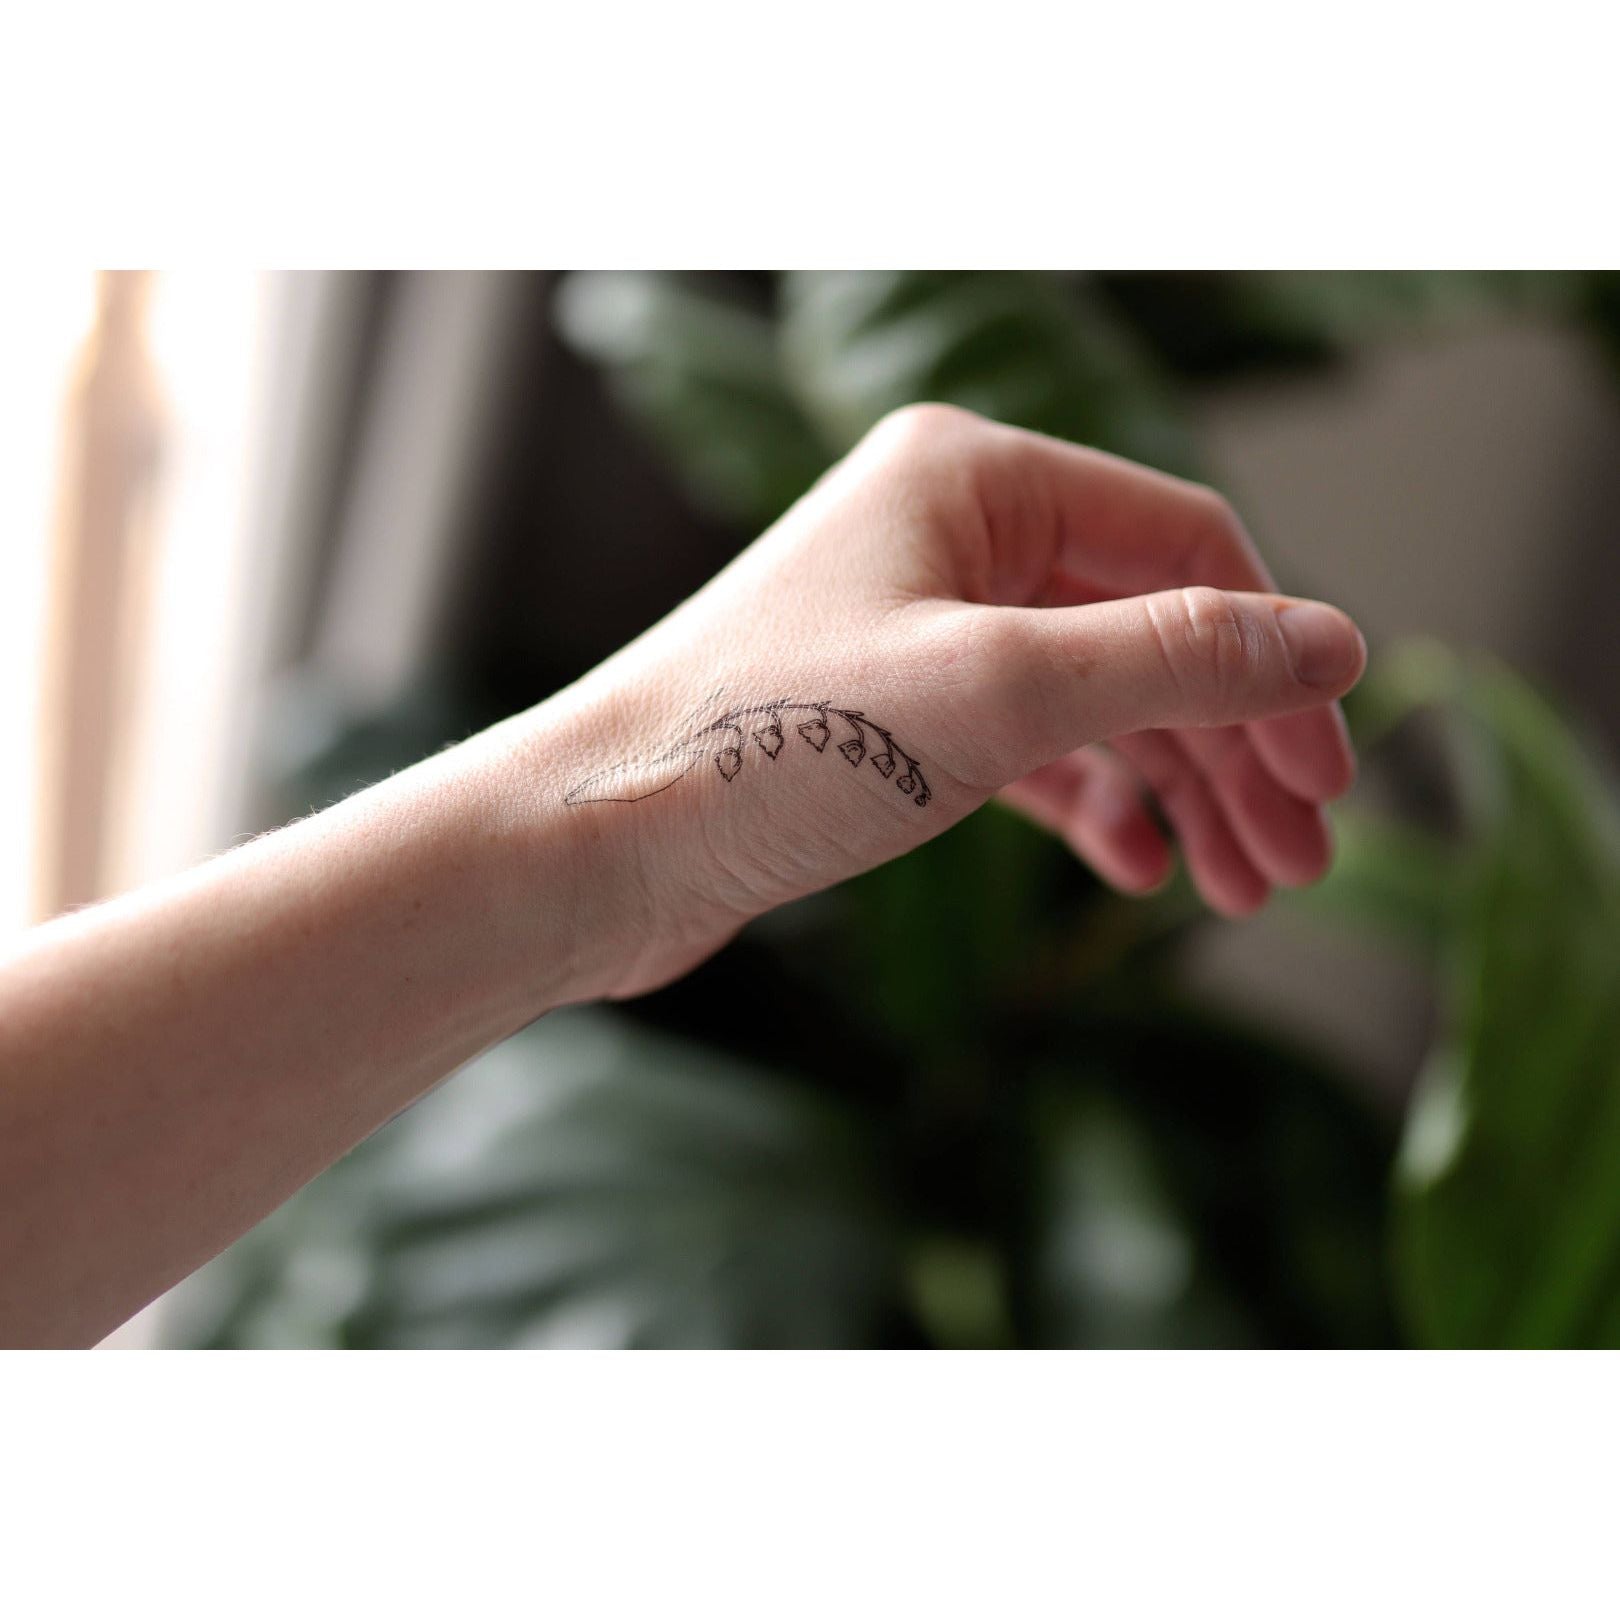 birth' in Realism Tattoos • Search in +1.3M Tattoos Now • Tattoodo